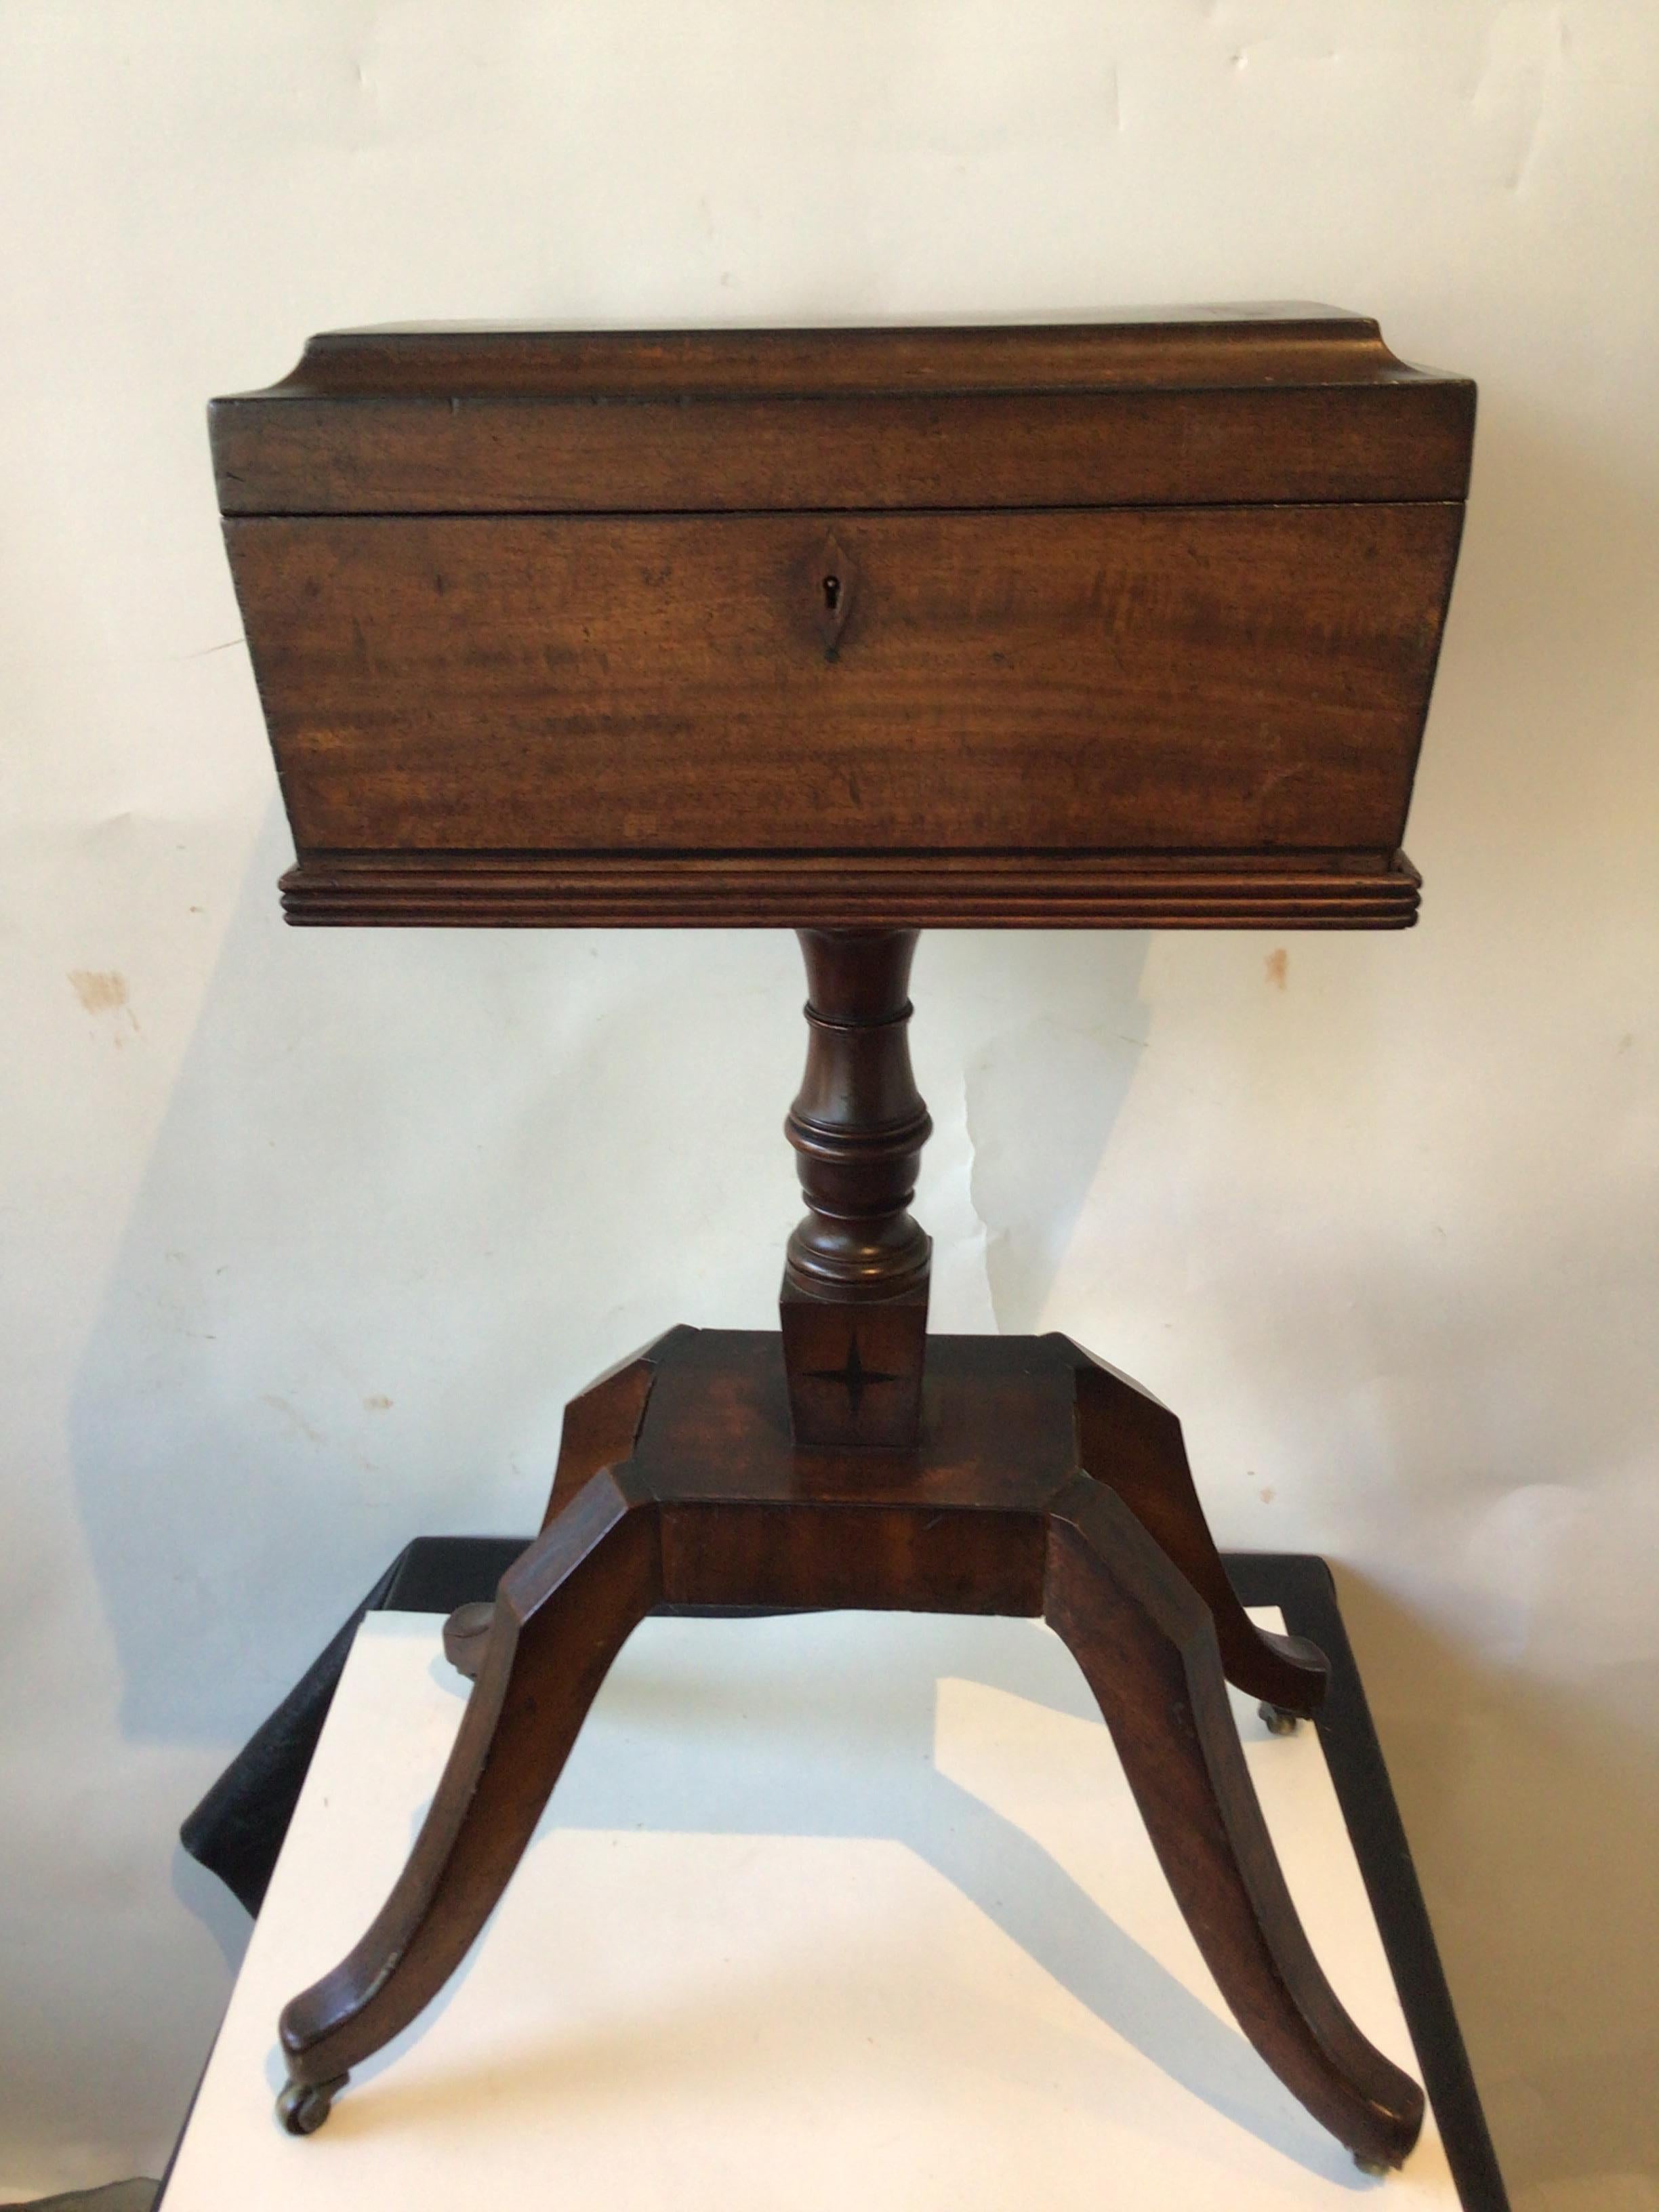 1860s English tea caddy box / table.